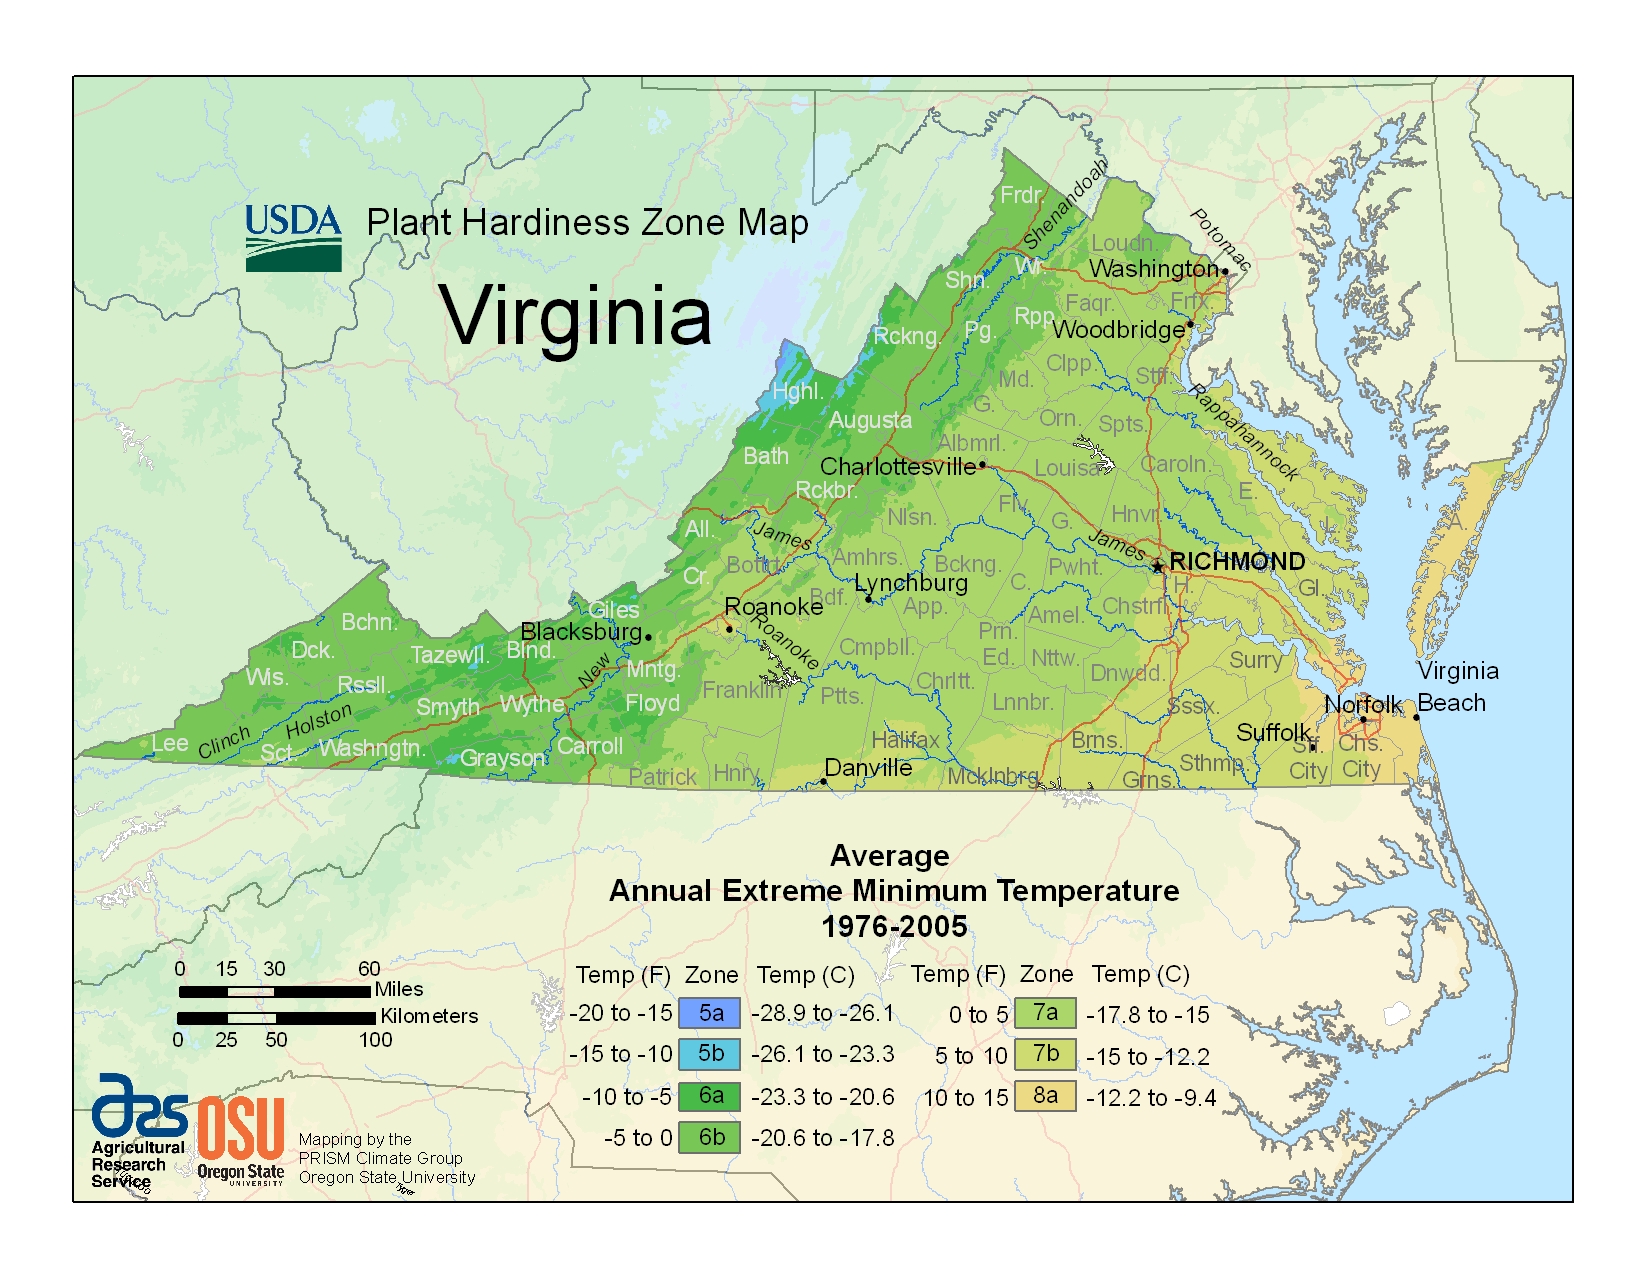 Virginia Hardiness Zones Virginia Department of Forestry